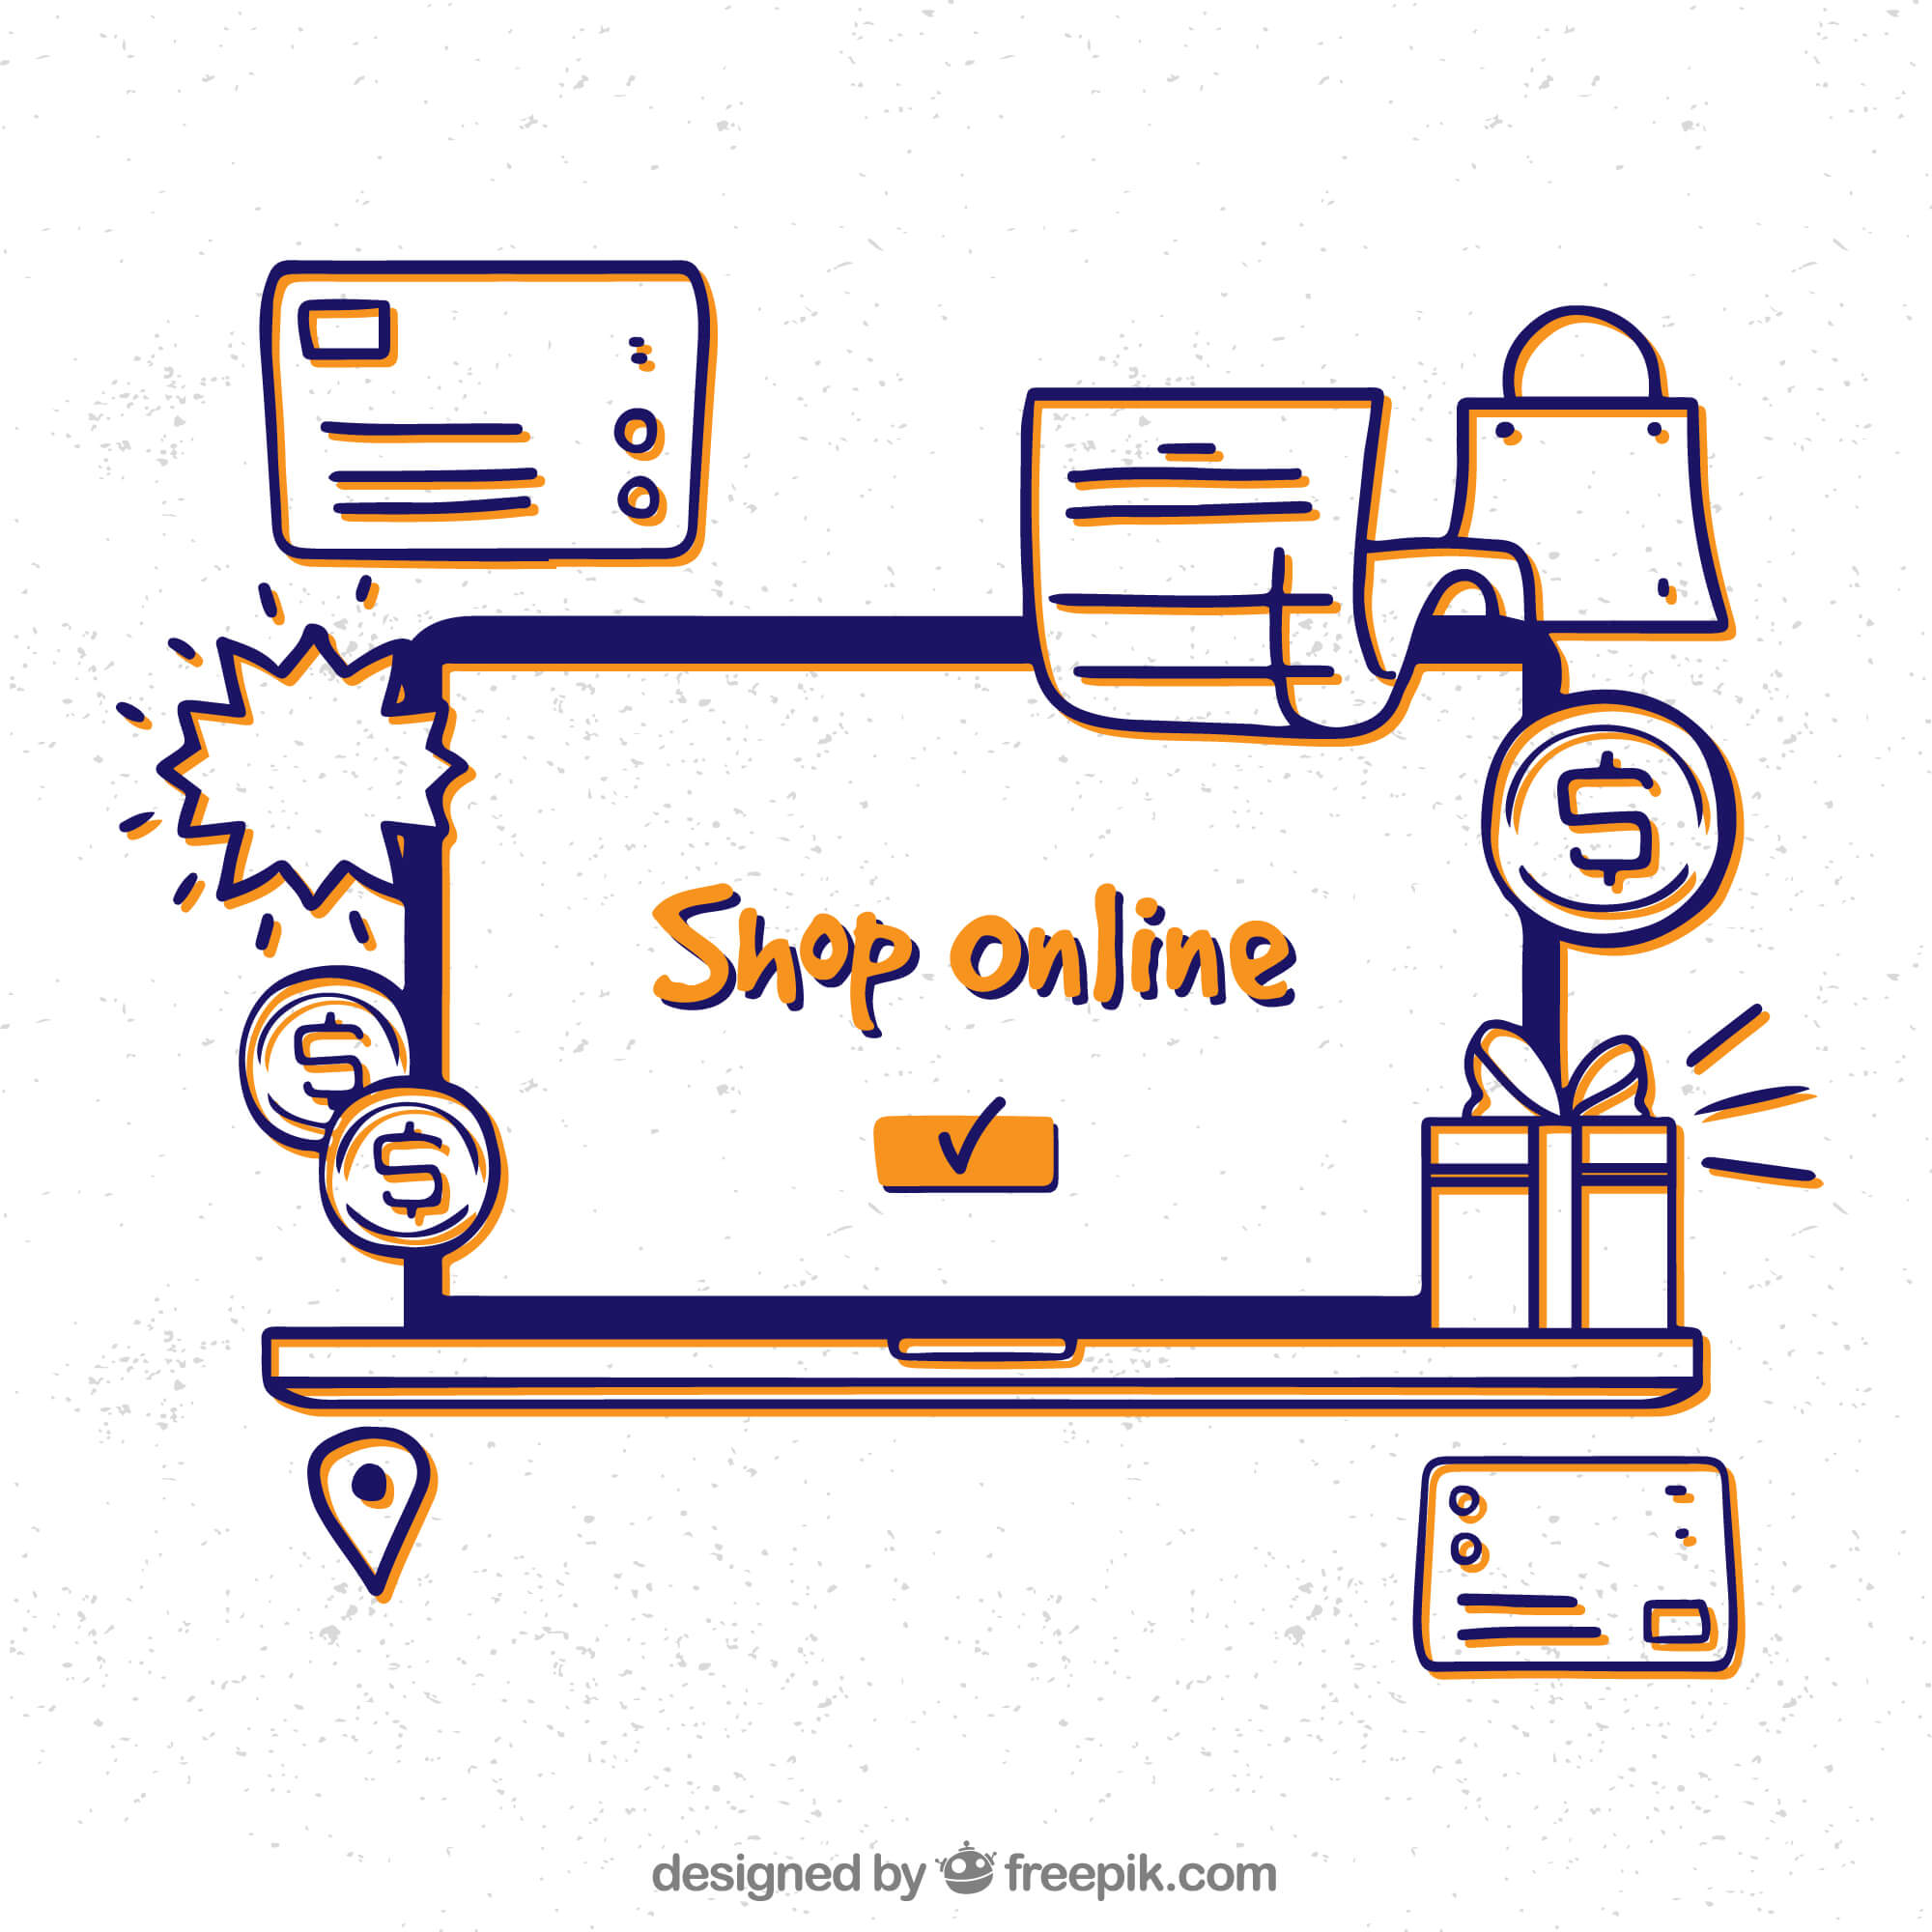 basic elements of successful e-commerce site design